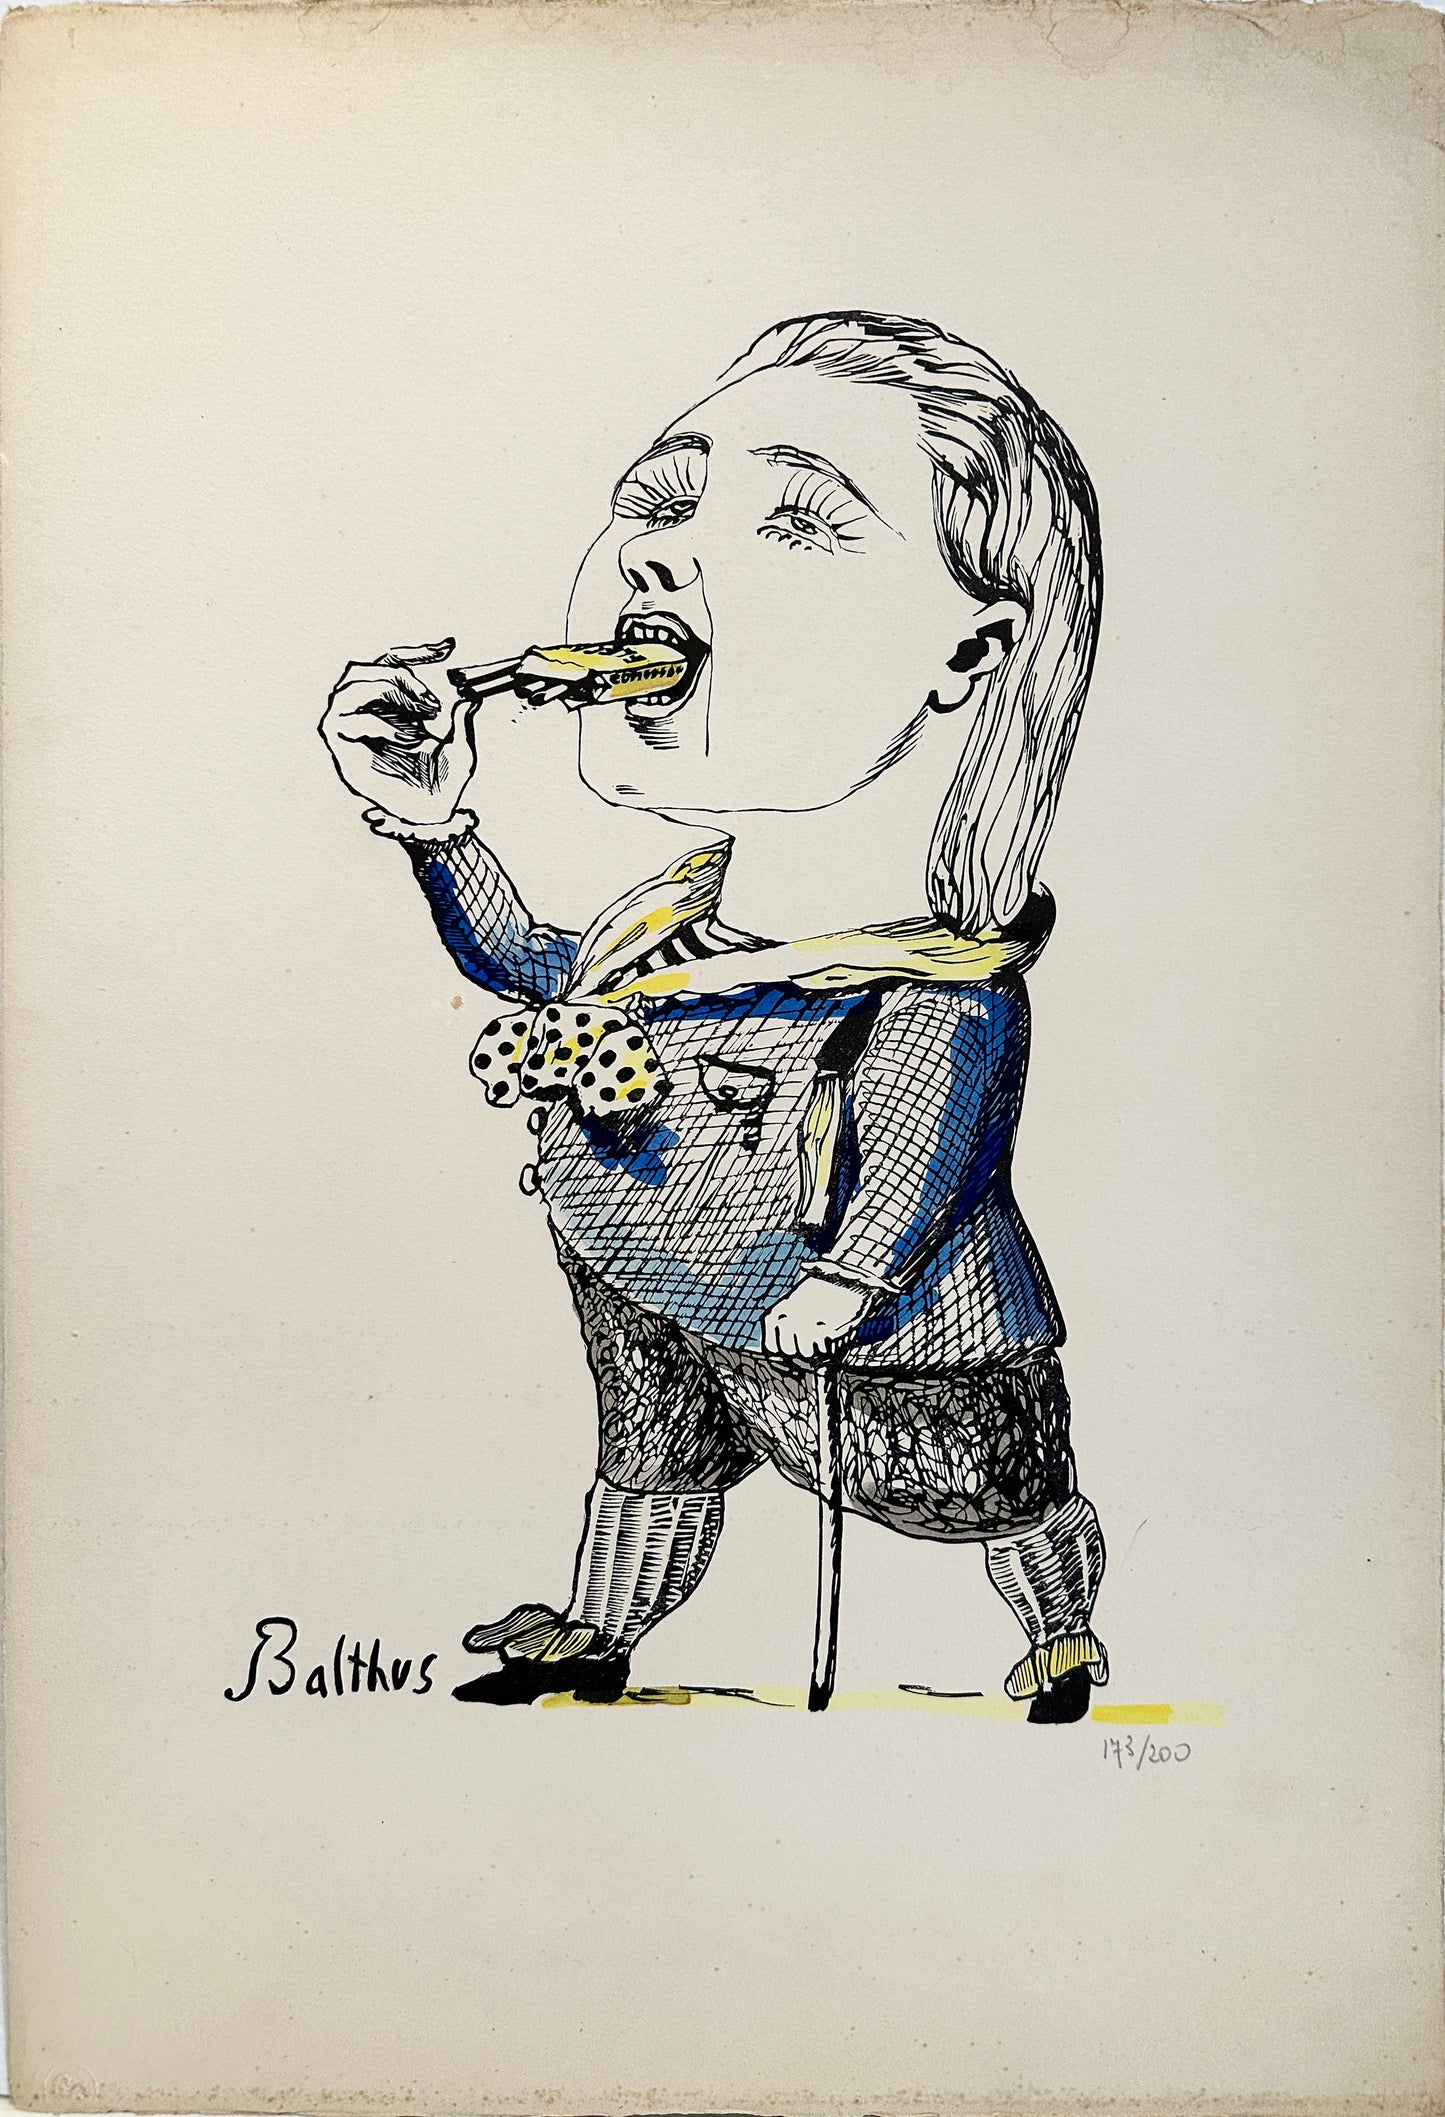 Balthus (Balthasar Klossowsky) Lithograph: "Man Eating a Cigarette", 1960